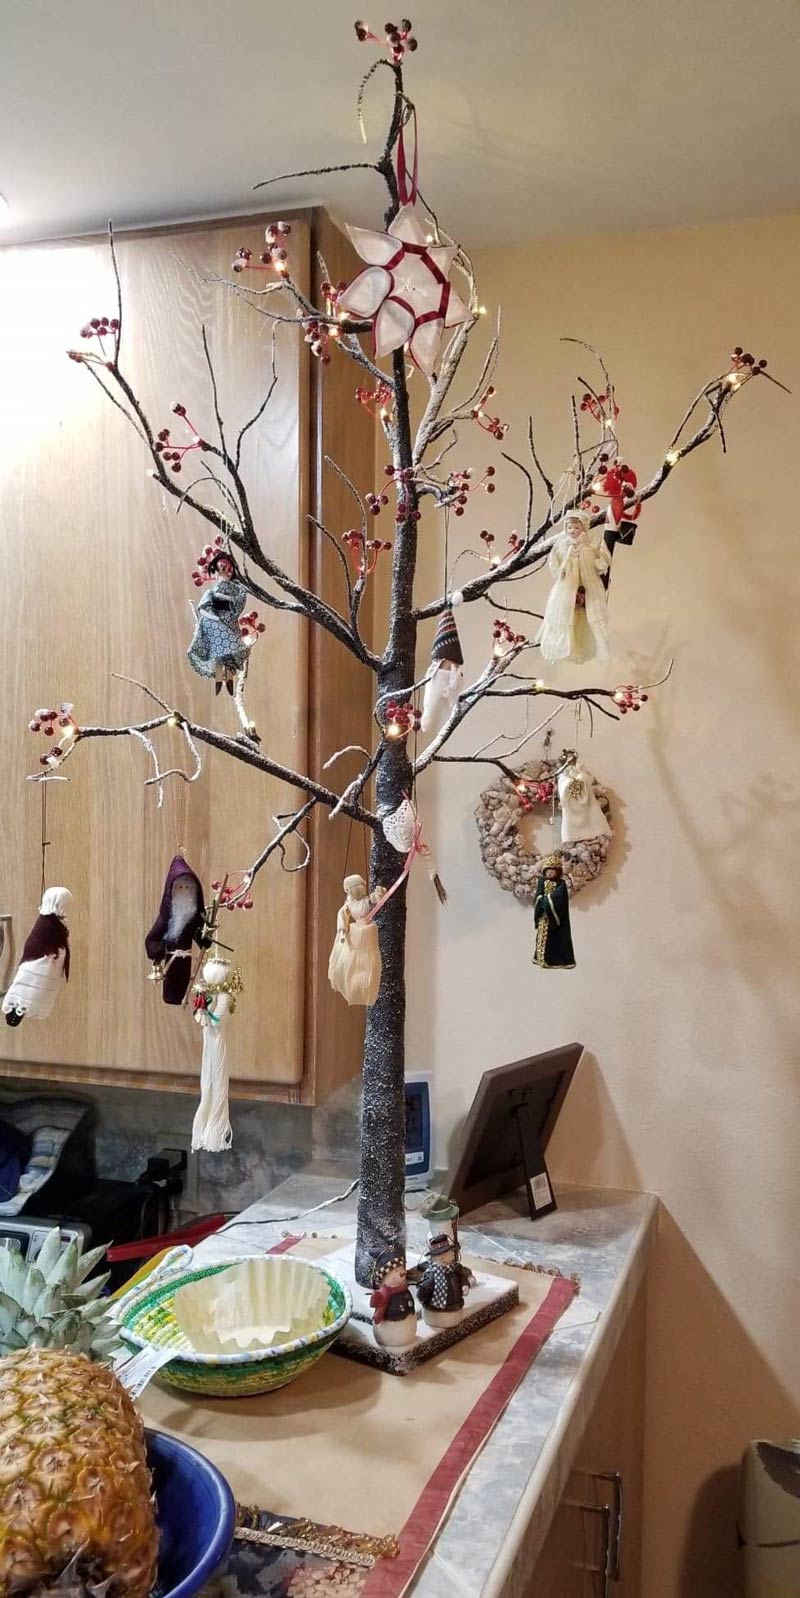 Grandma lynched the whole nativity scene